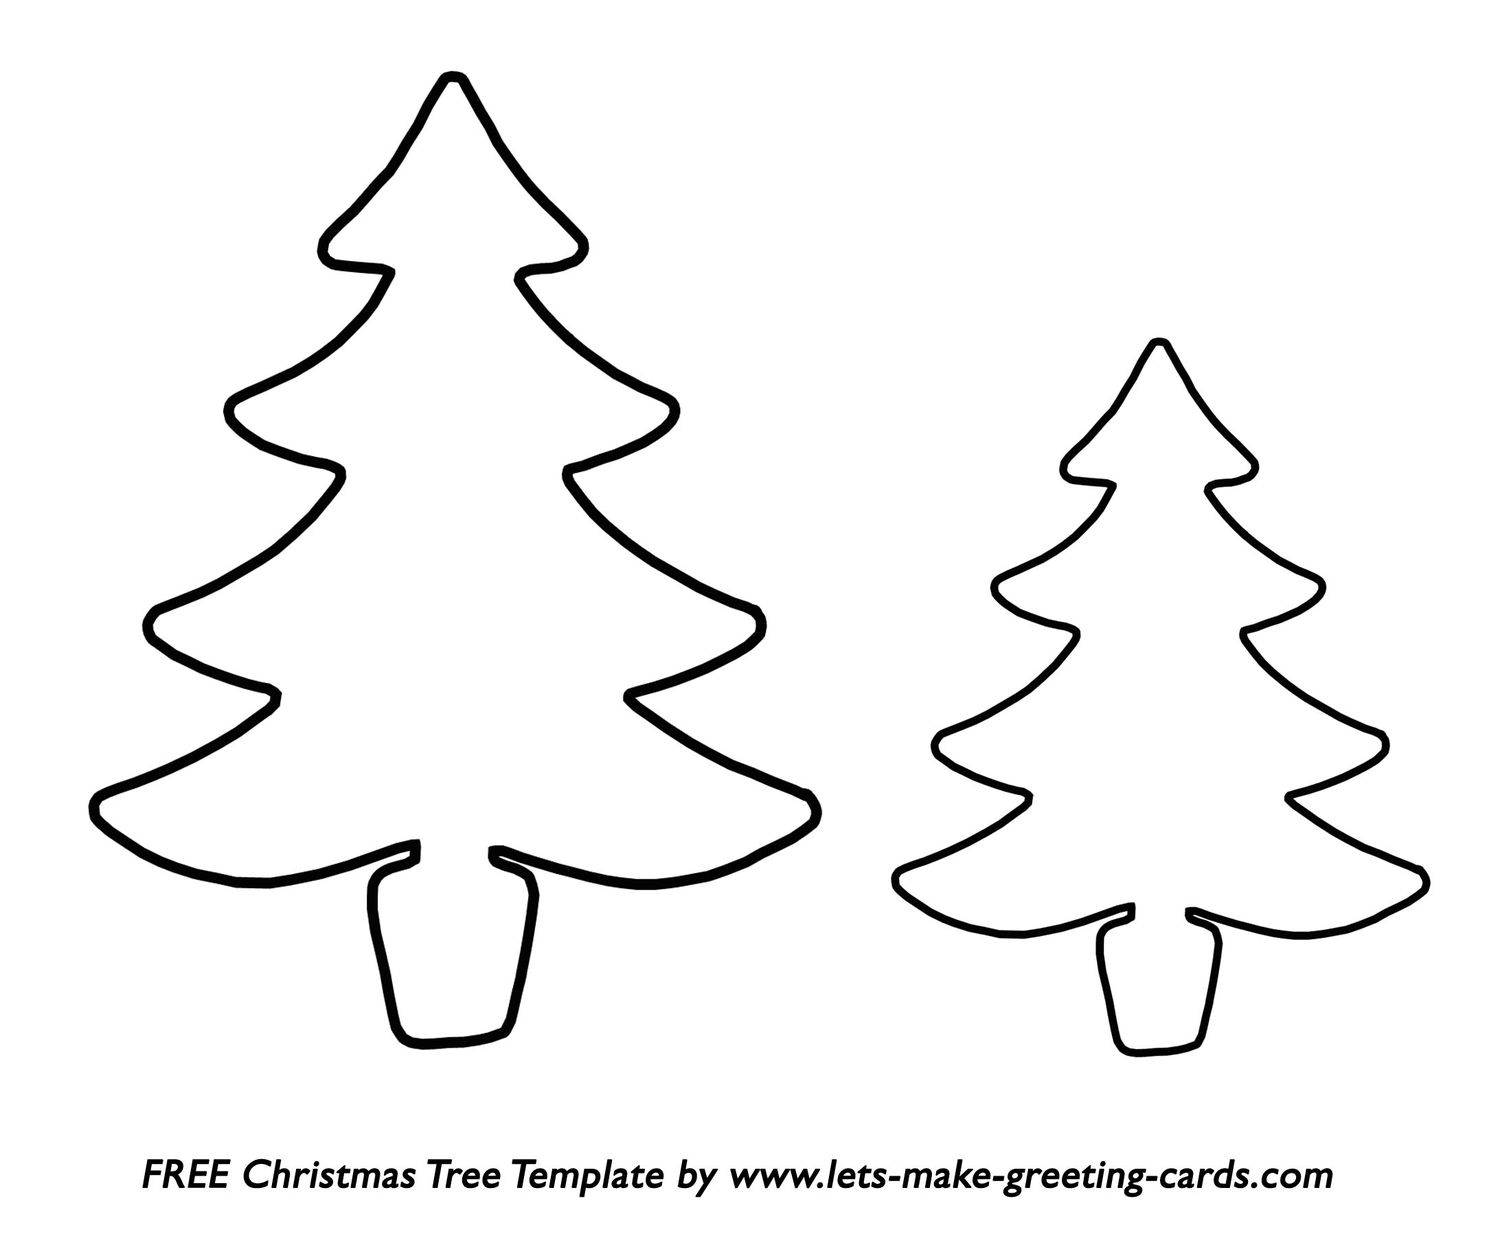 Free christmas tree templates